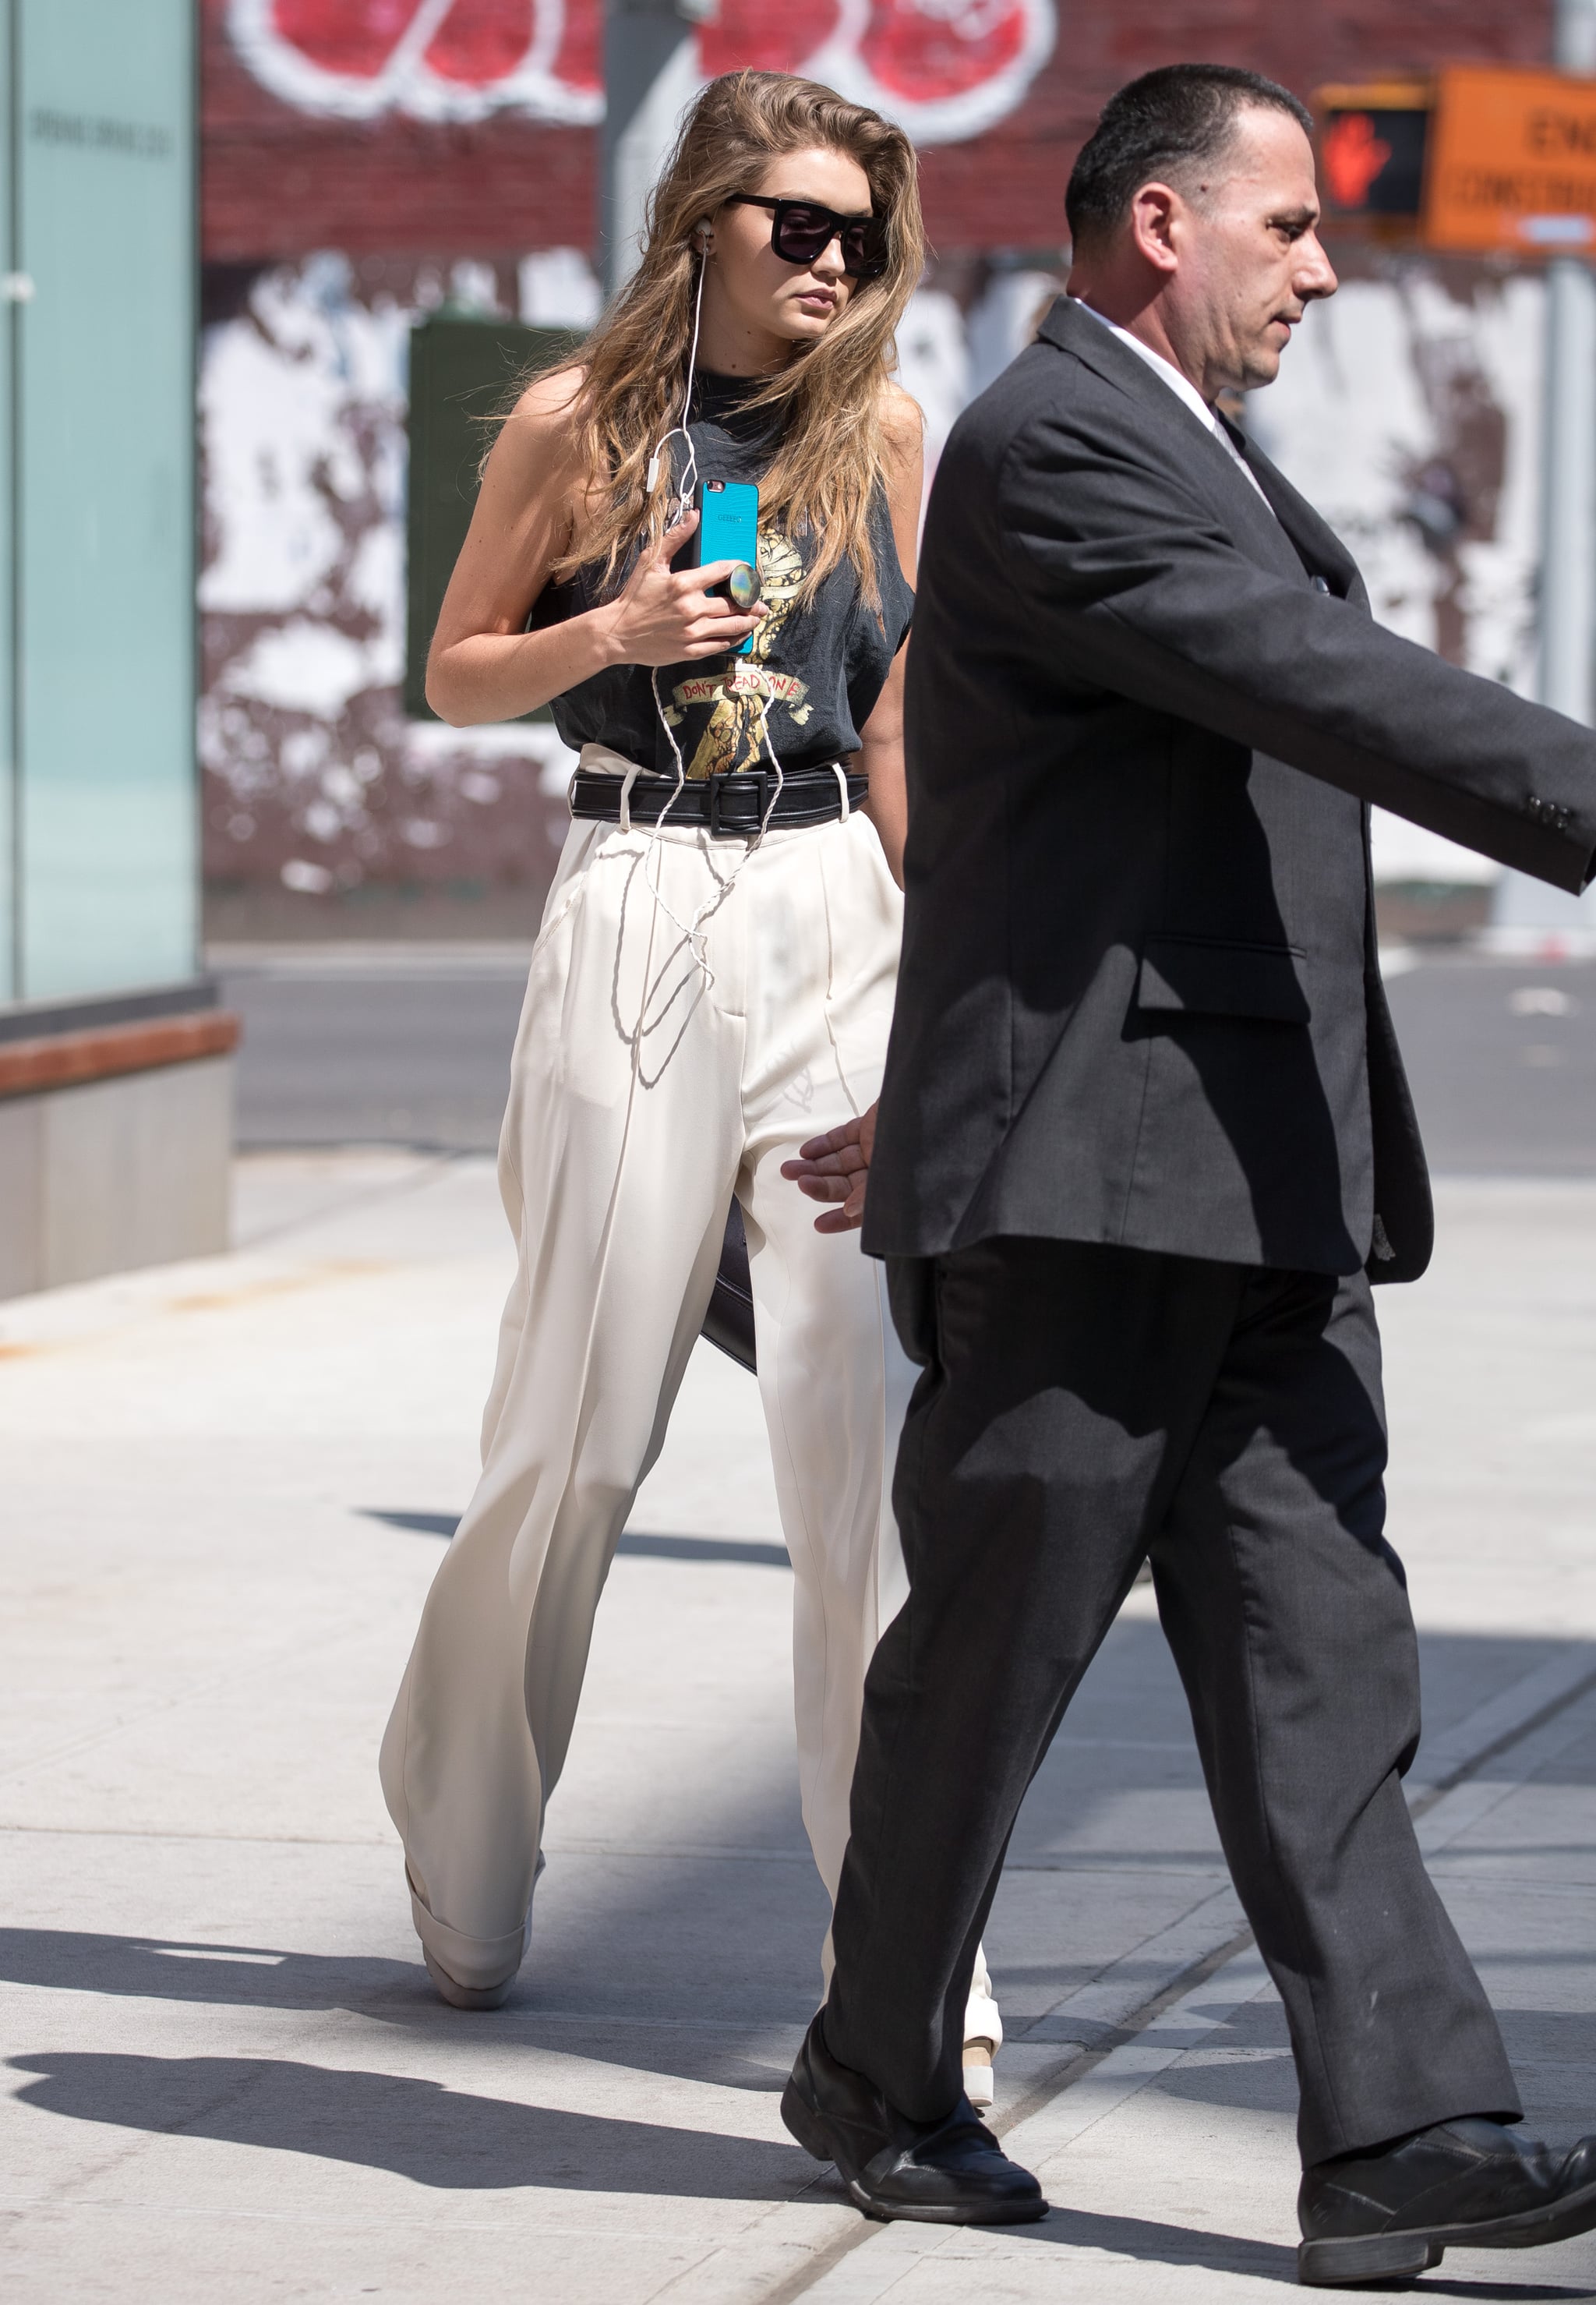 Gigi Hadid Turns Heads in Cool Versace Pants in Paris Photo 4312614  Gigi  Hadid Photos  Just Jared Entertainment News